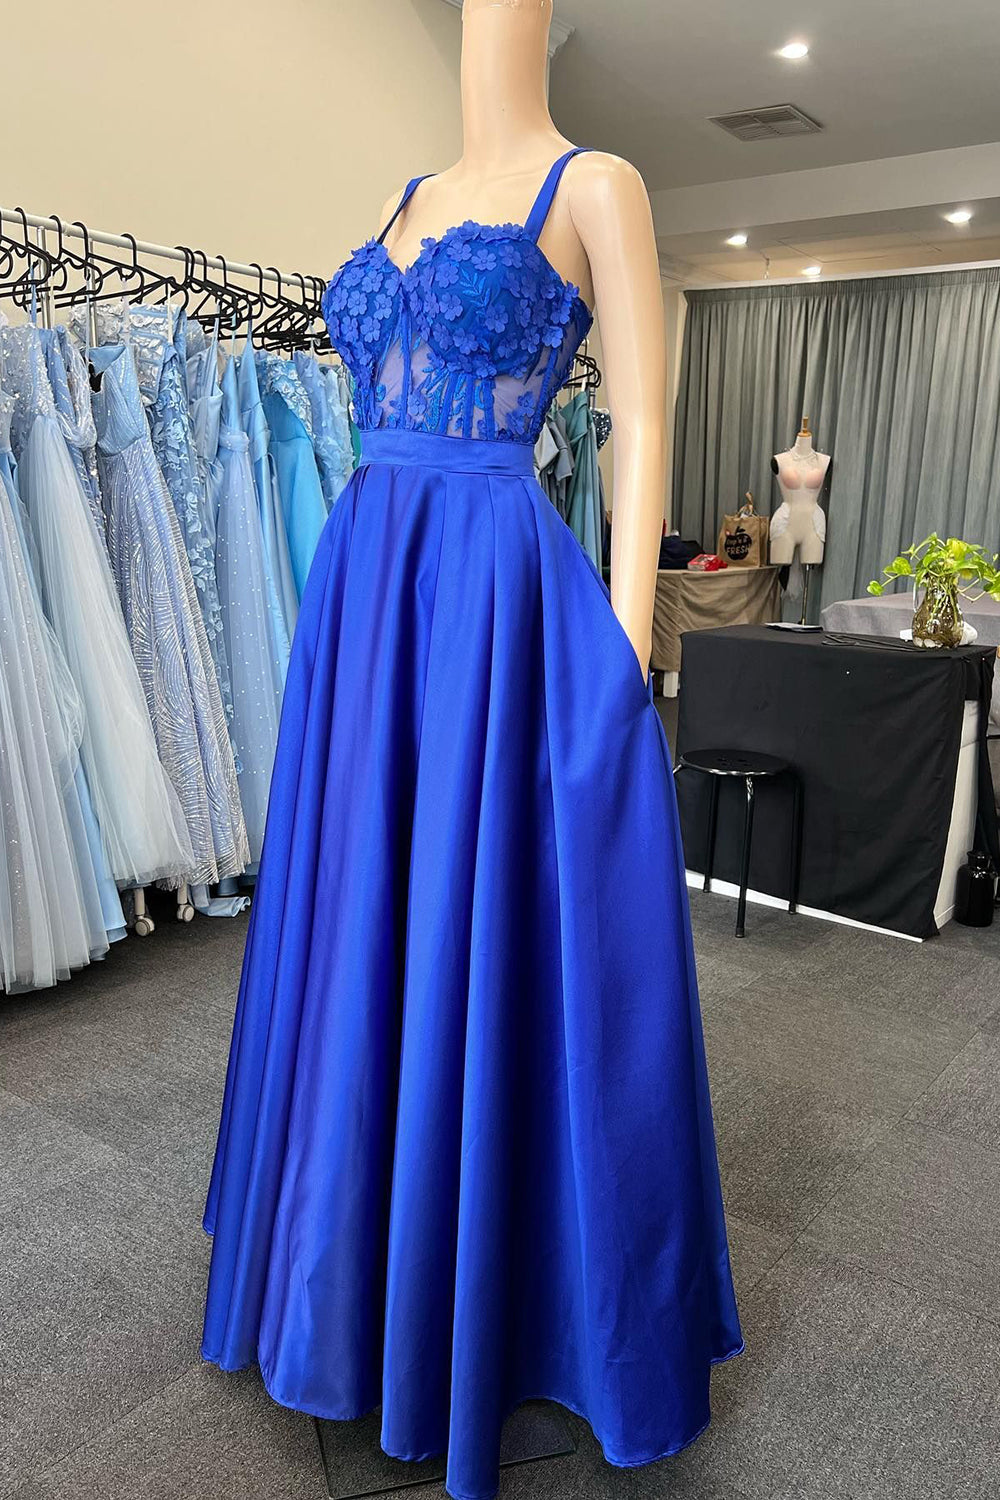 Queendancer Women Royal Blue Corset Prom Dress with Appliques